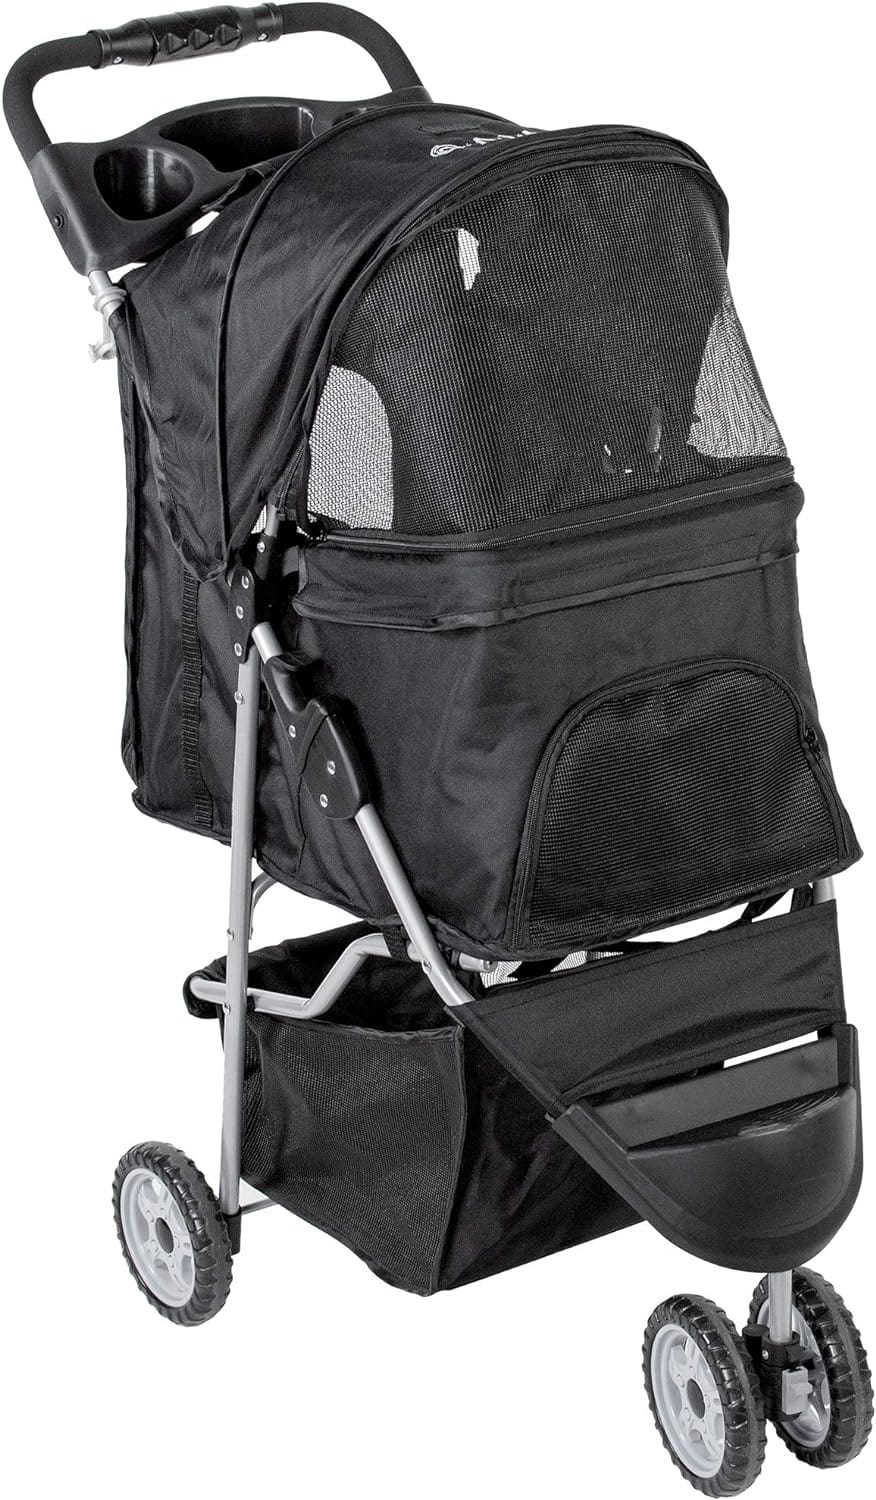 VIVO Black 3 Wheel Pet Stroller Review